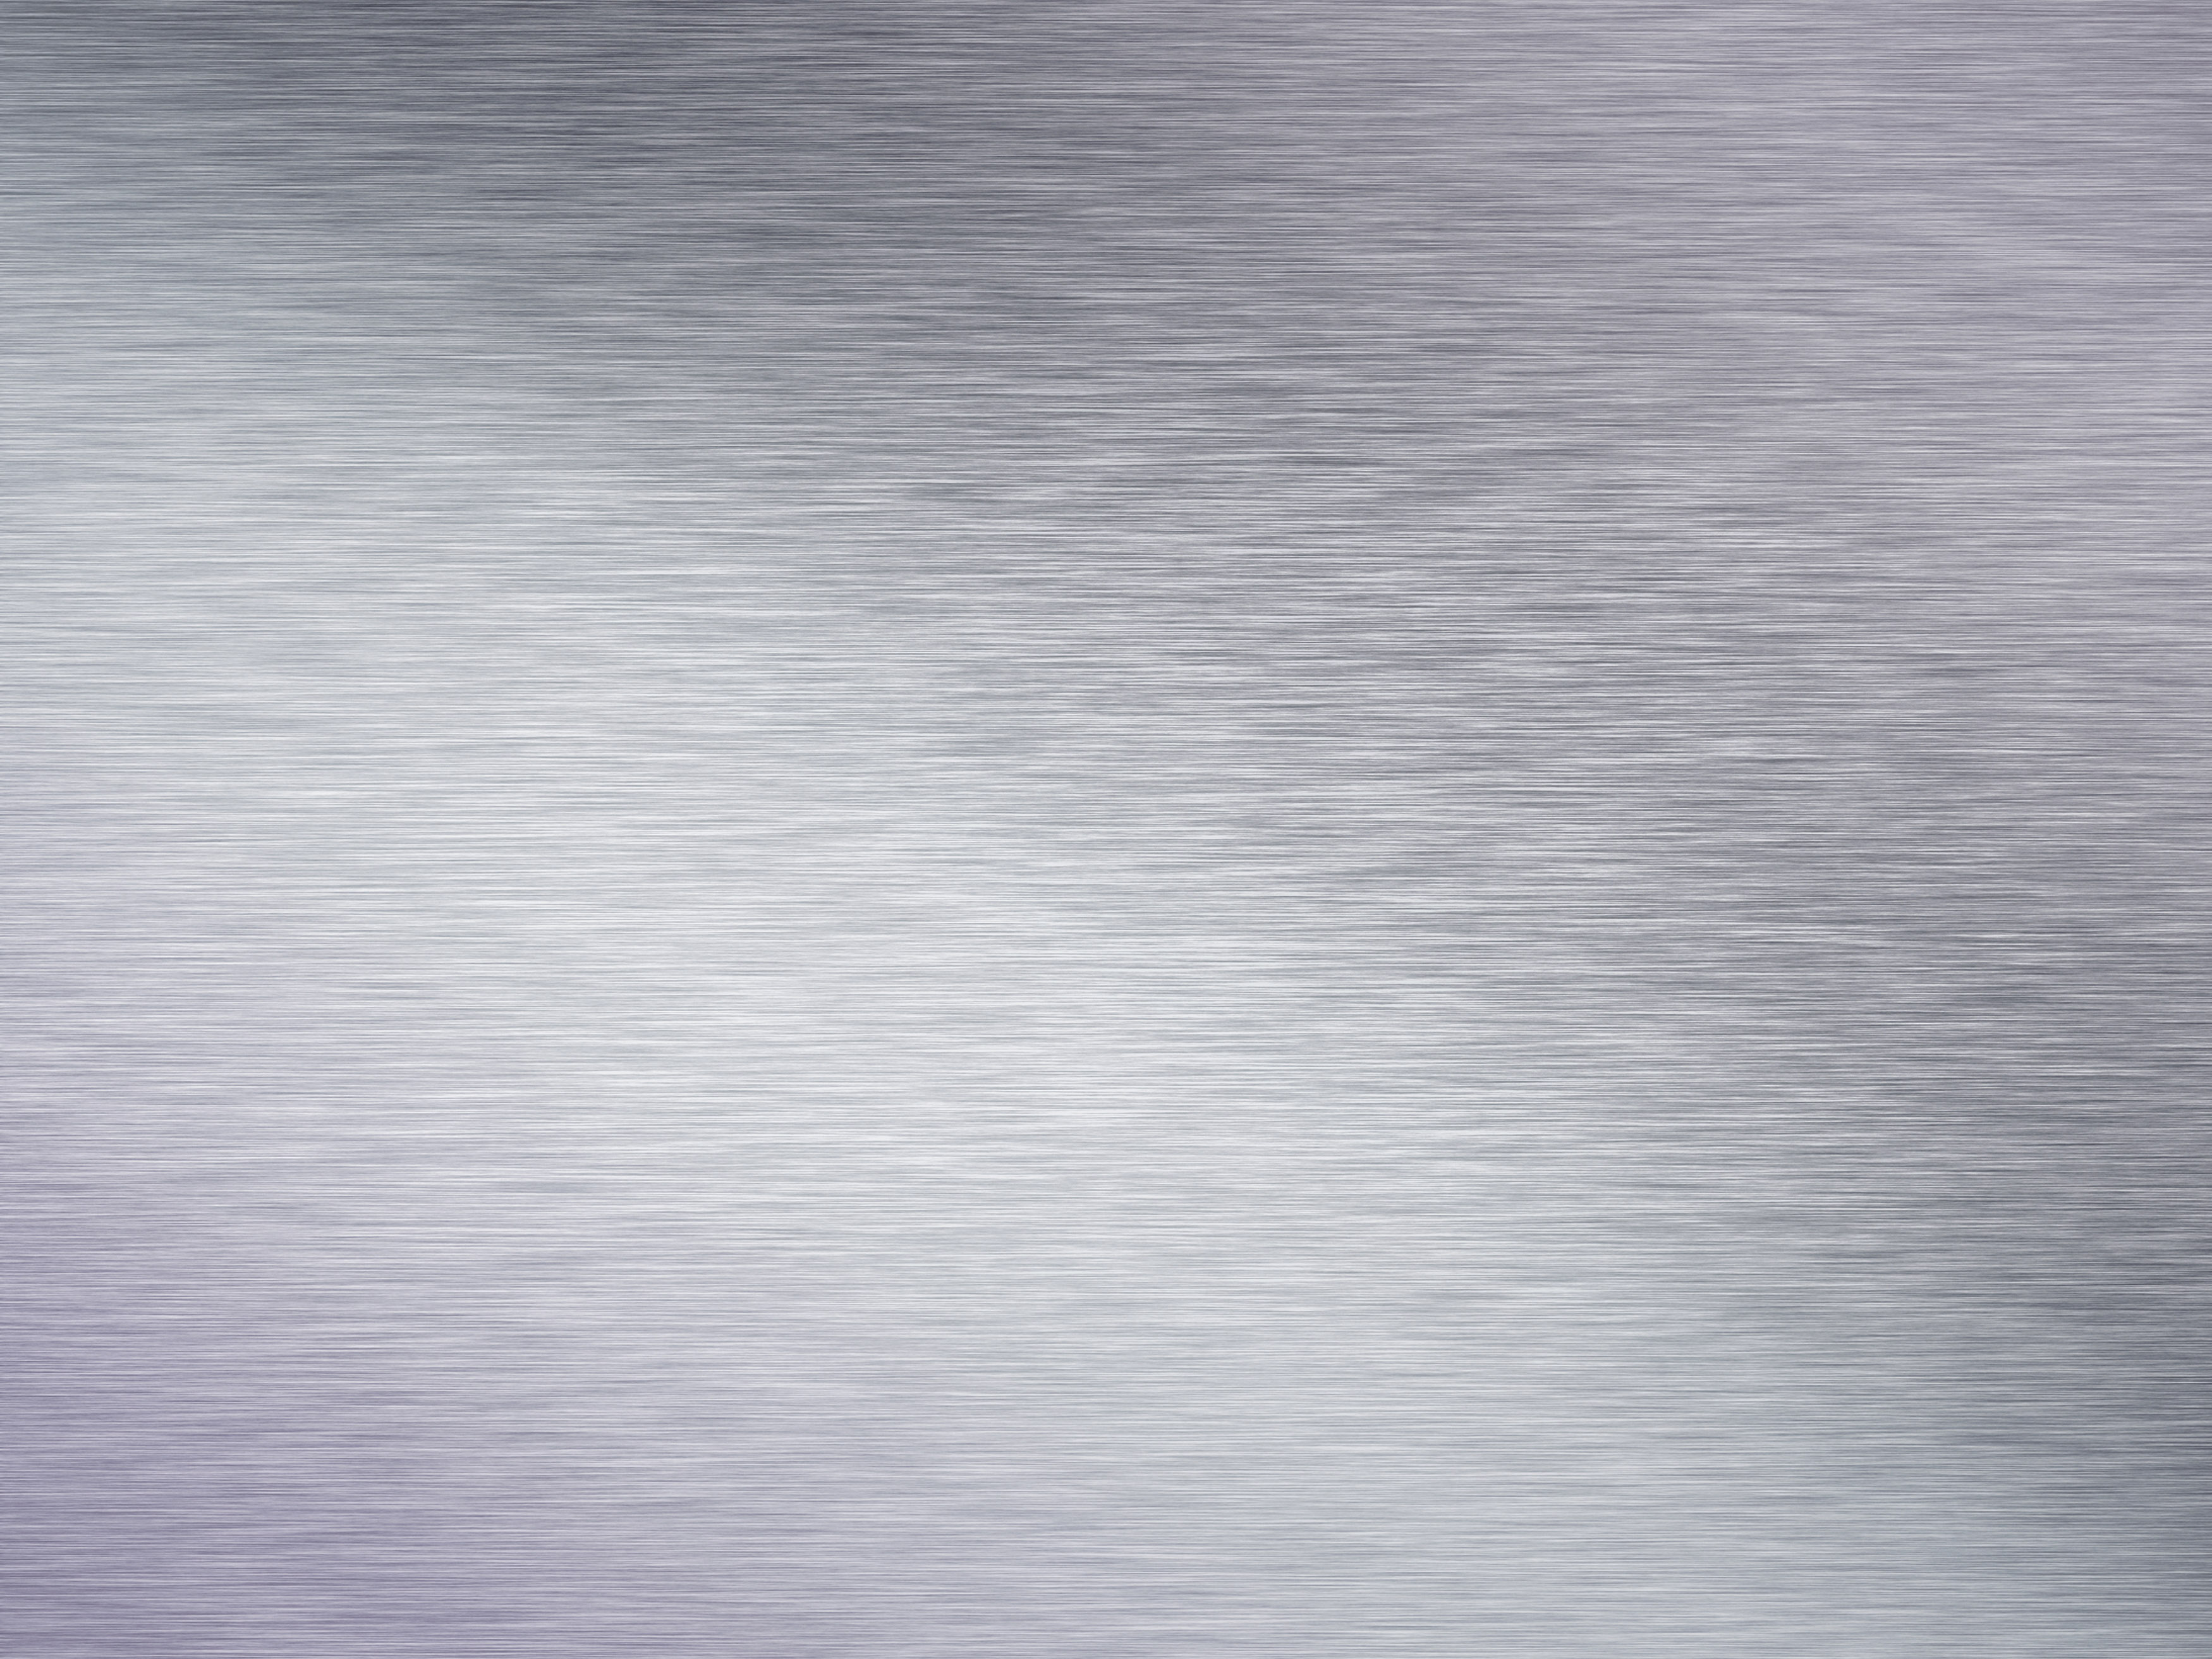 Grey Brushed Steel Or Aluminium Metal Background Texture